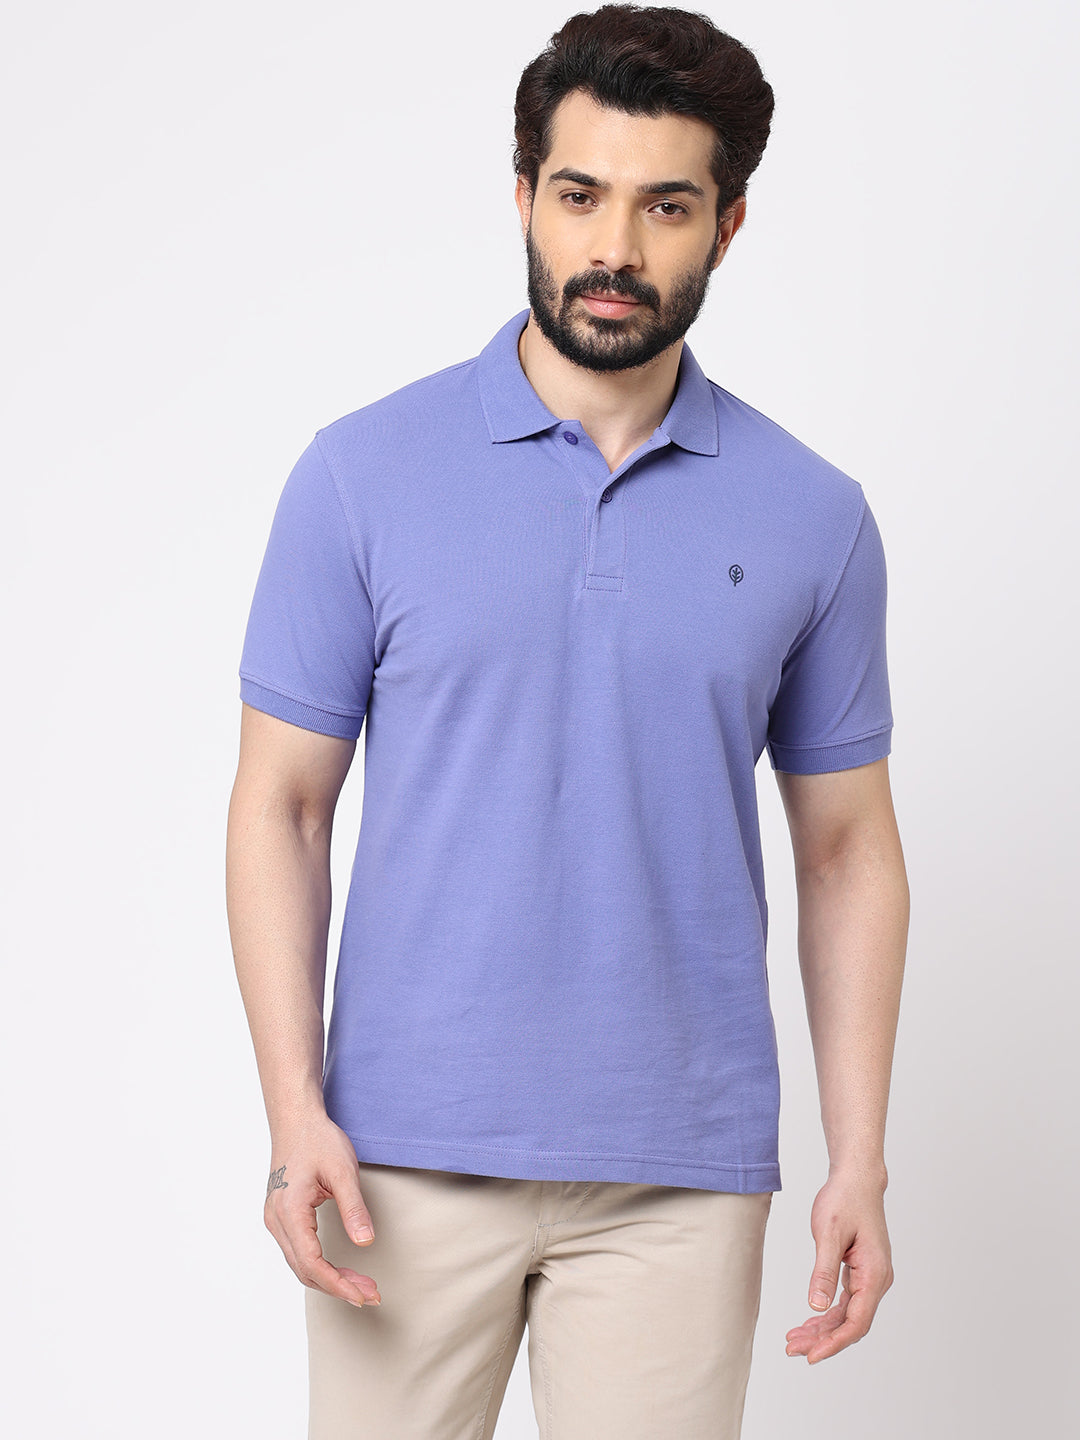 Buy Mens Cotton Casual Wear Regular Fit Tshirt|Cottonworld